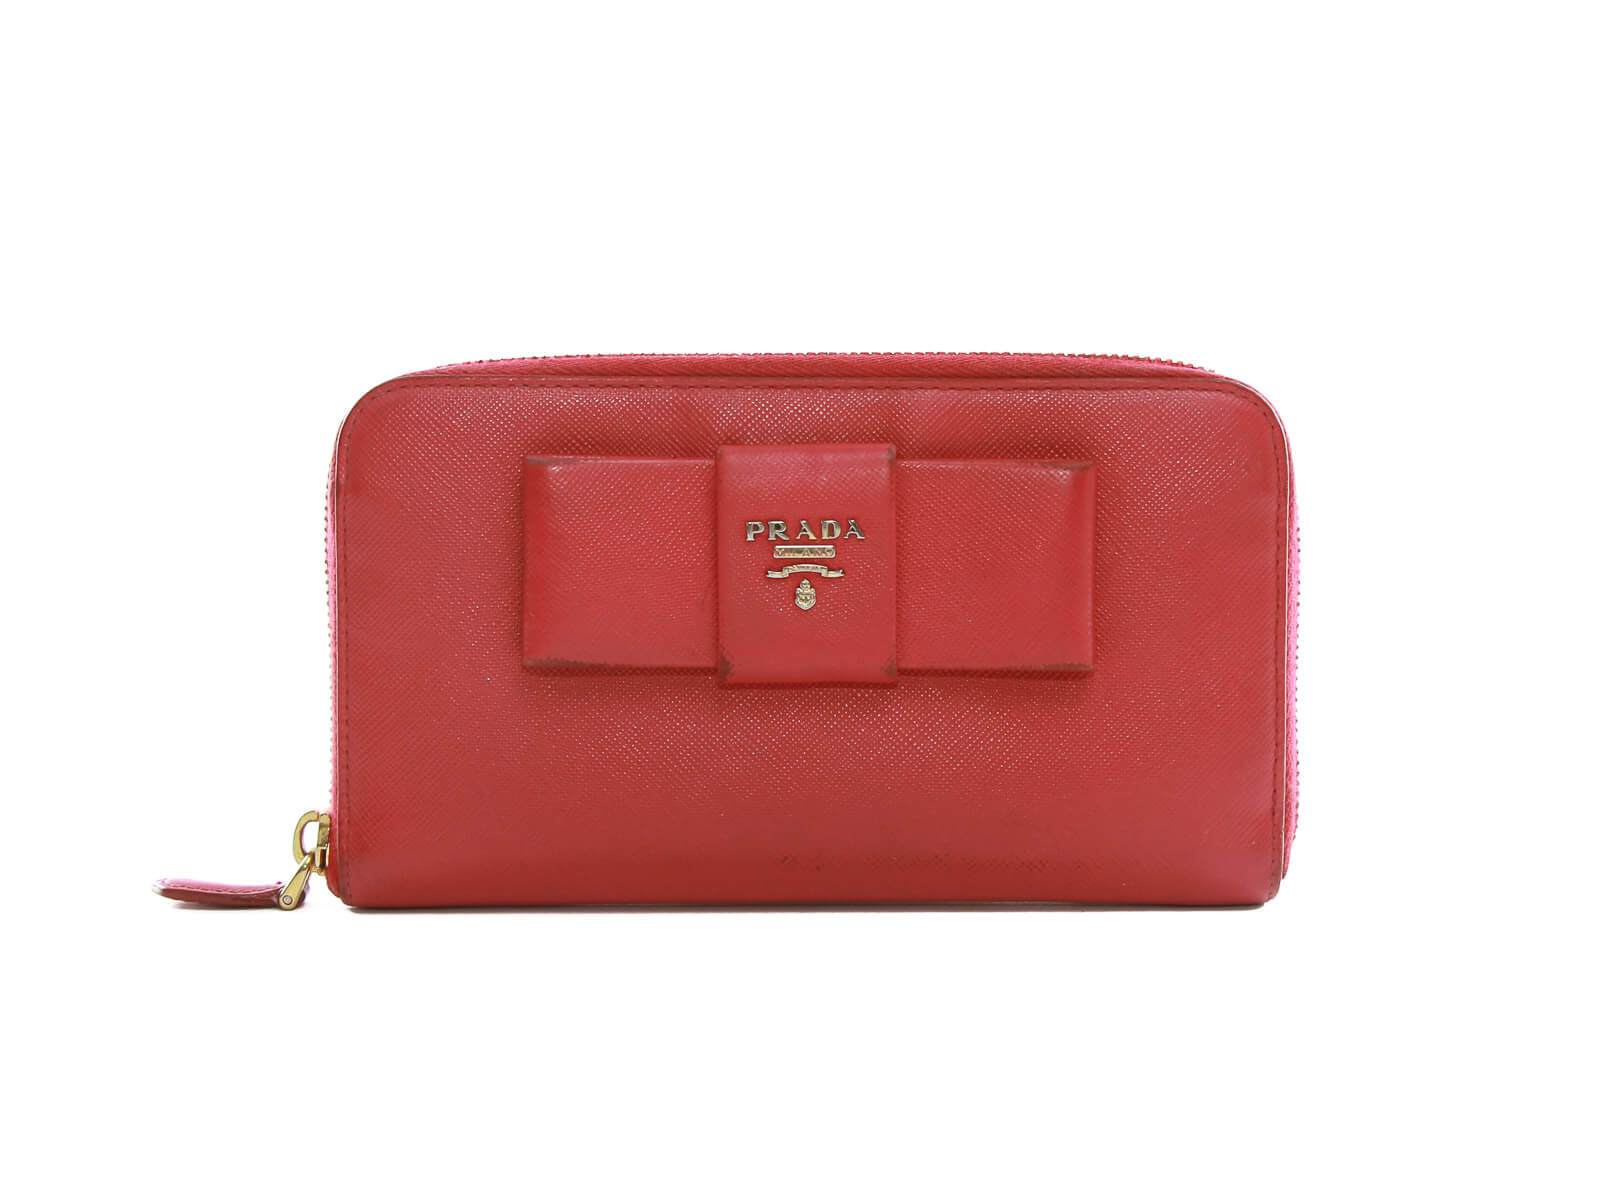 Authentic PRADA nylon/leather satchel purse 🌷🌷🌷 | eBay